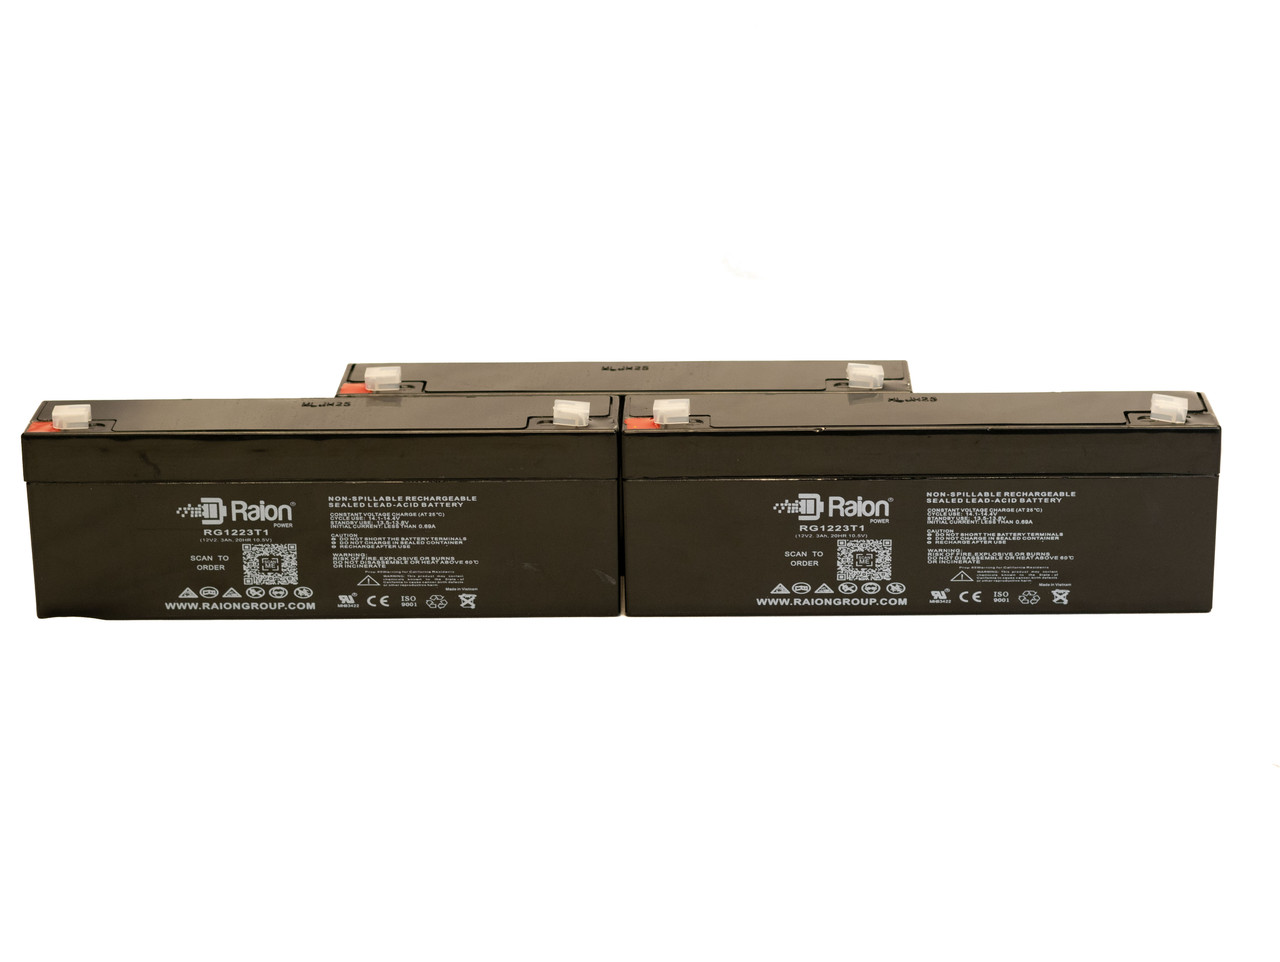 Raion Power 12V 2.3Ah RG1223T1 Replacement Medical Battery for Novametrix Medical Systems 2001 Pulse Oximeter - 3 Pack